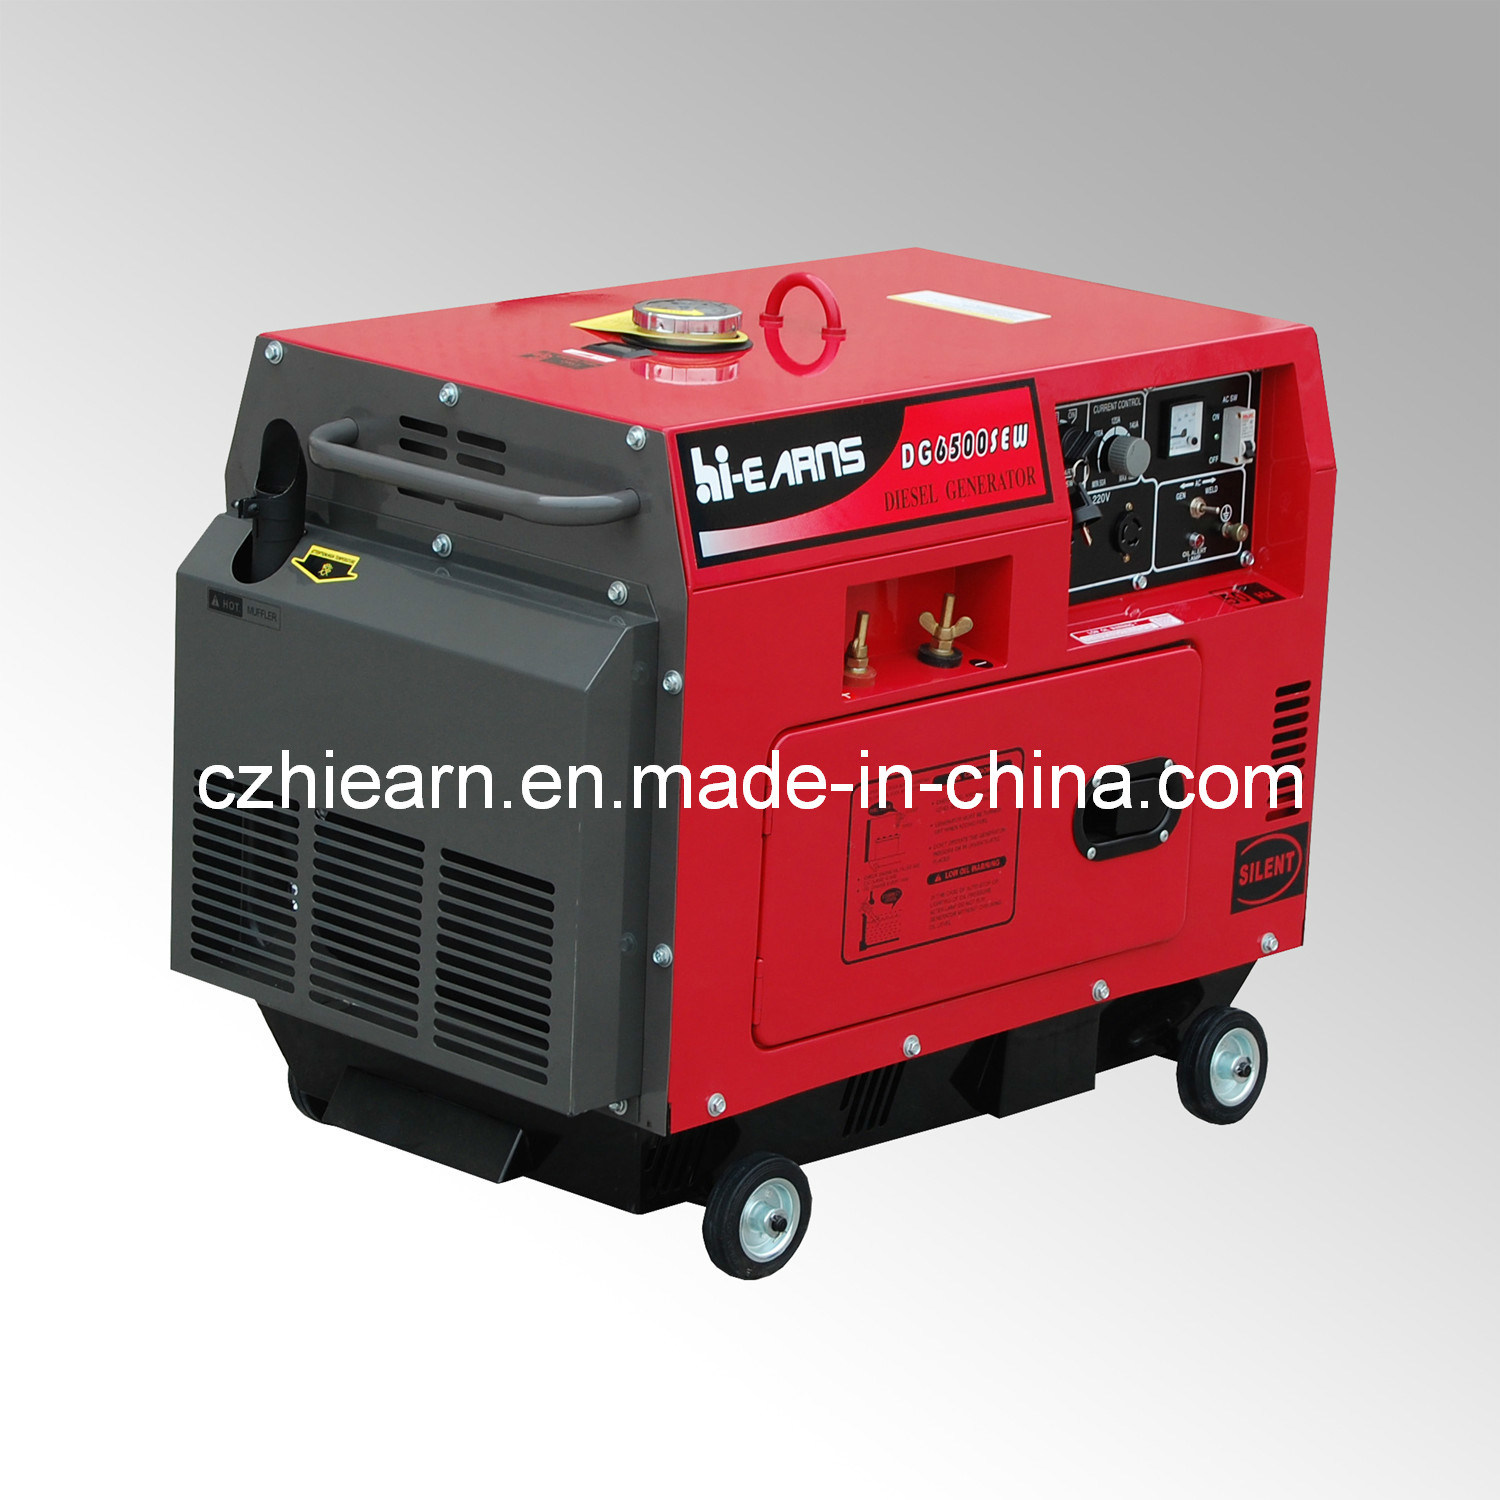 Welding Silent Diesel Generator with Red Color (DG6500SEW)